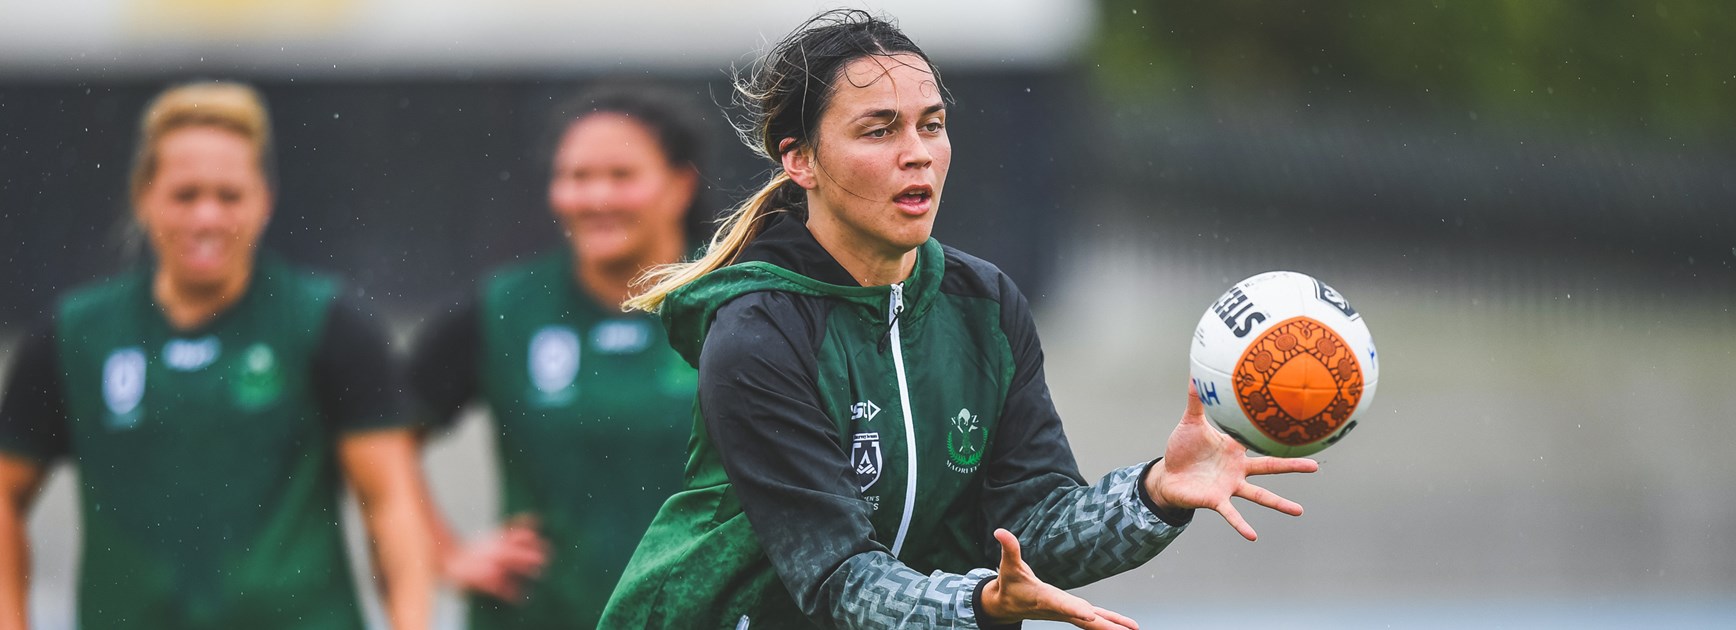 Maori side name Ponga, star-studded pack for All Stars clash